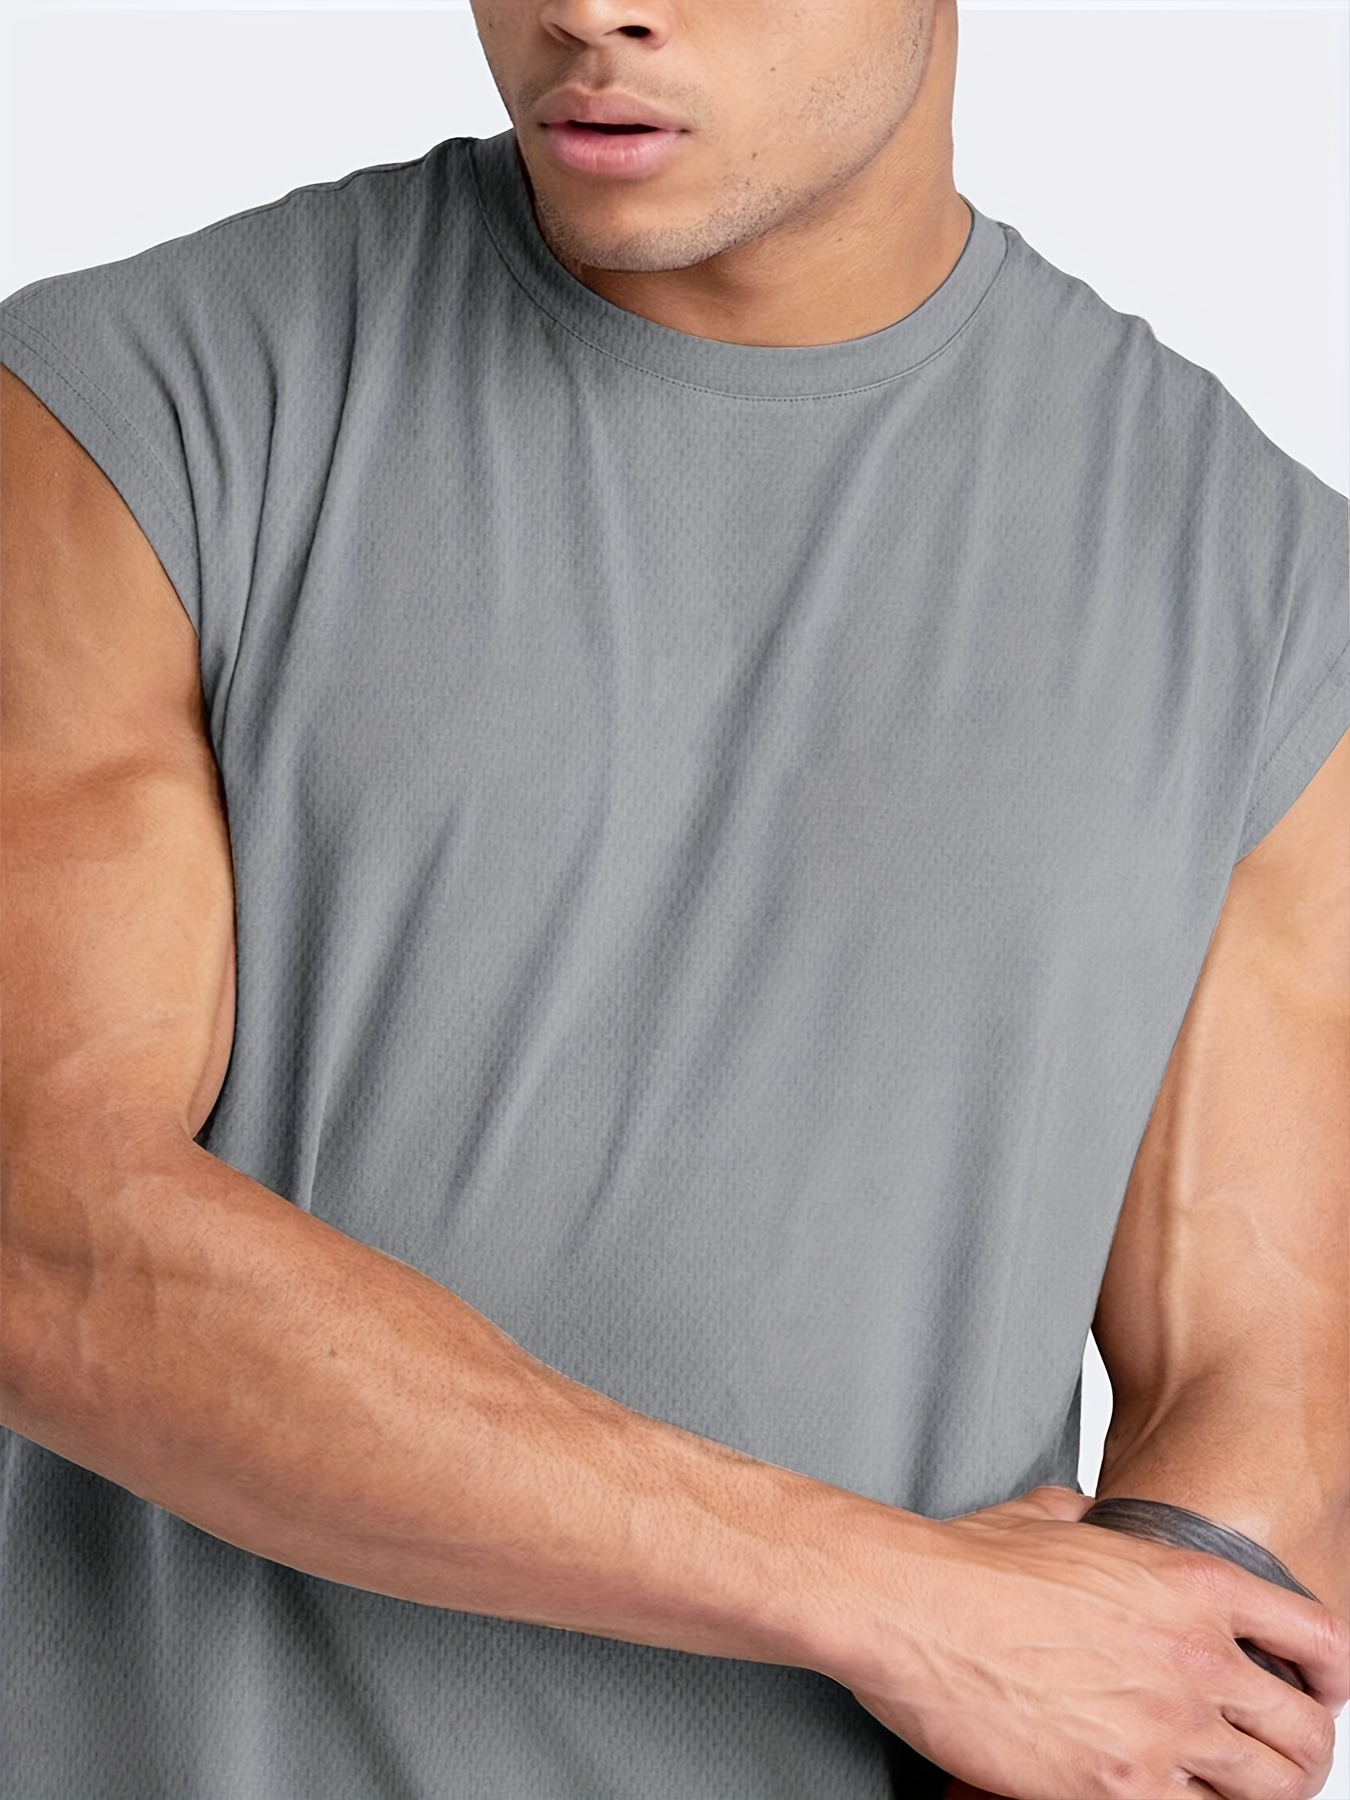 Tanque muscular Roupas Masculinas  Vestuário Fitness Homens Vest